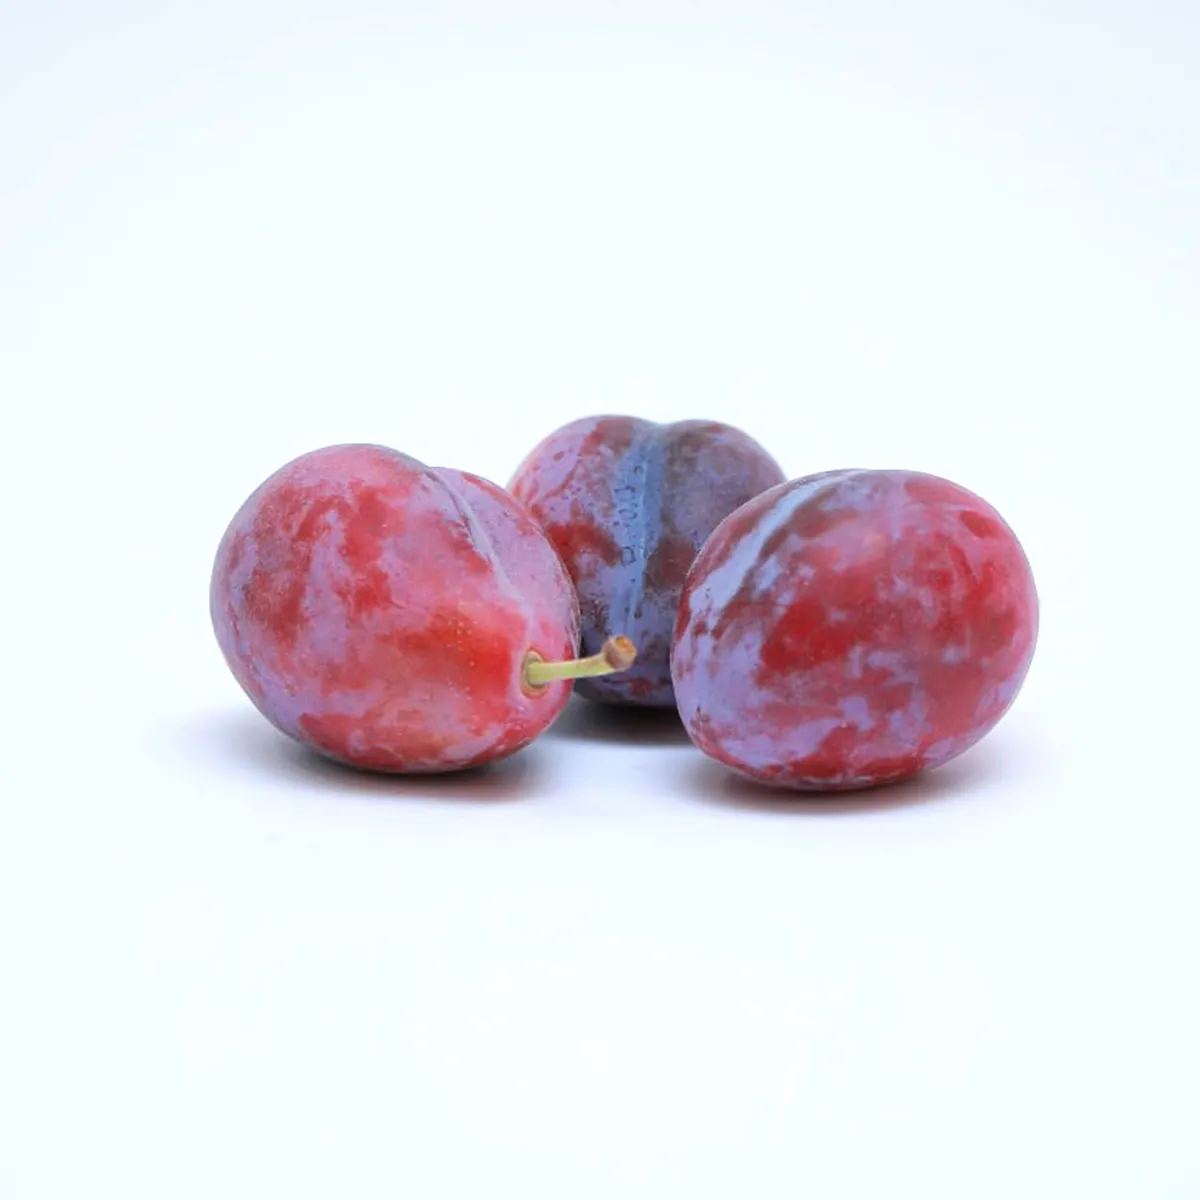 High grade non-GMO delicious new crop wholesale fresh fruits from Uzbekistan fresh plum in bulk for Food